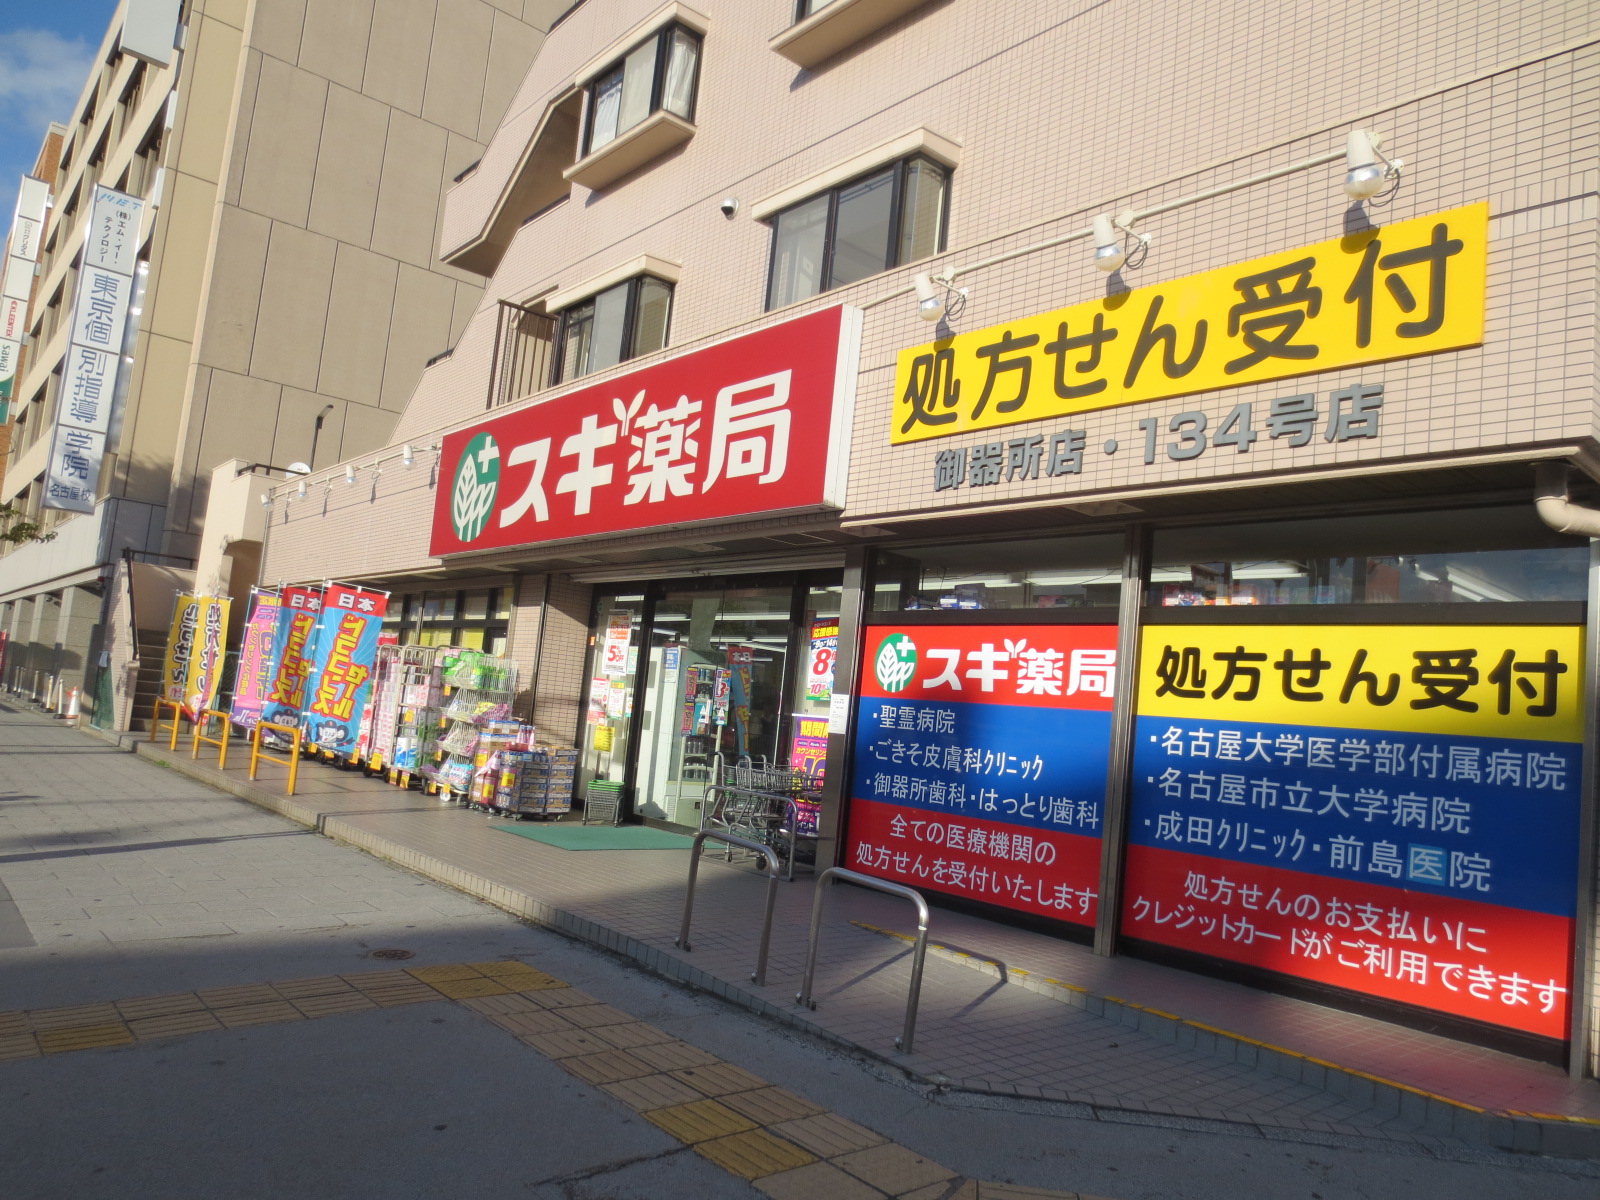 Dorakkusutoa. Cedar pharmacy Gokisho shop 385m until (drugstore)